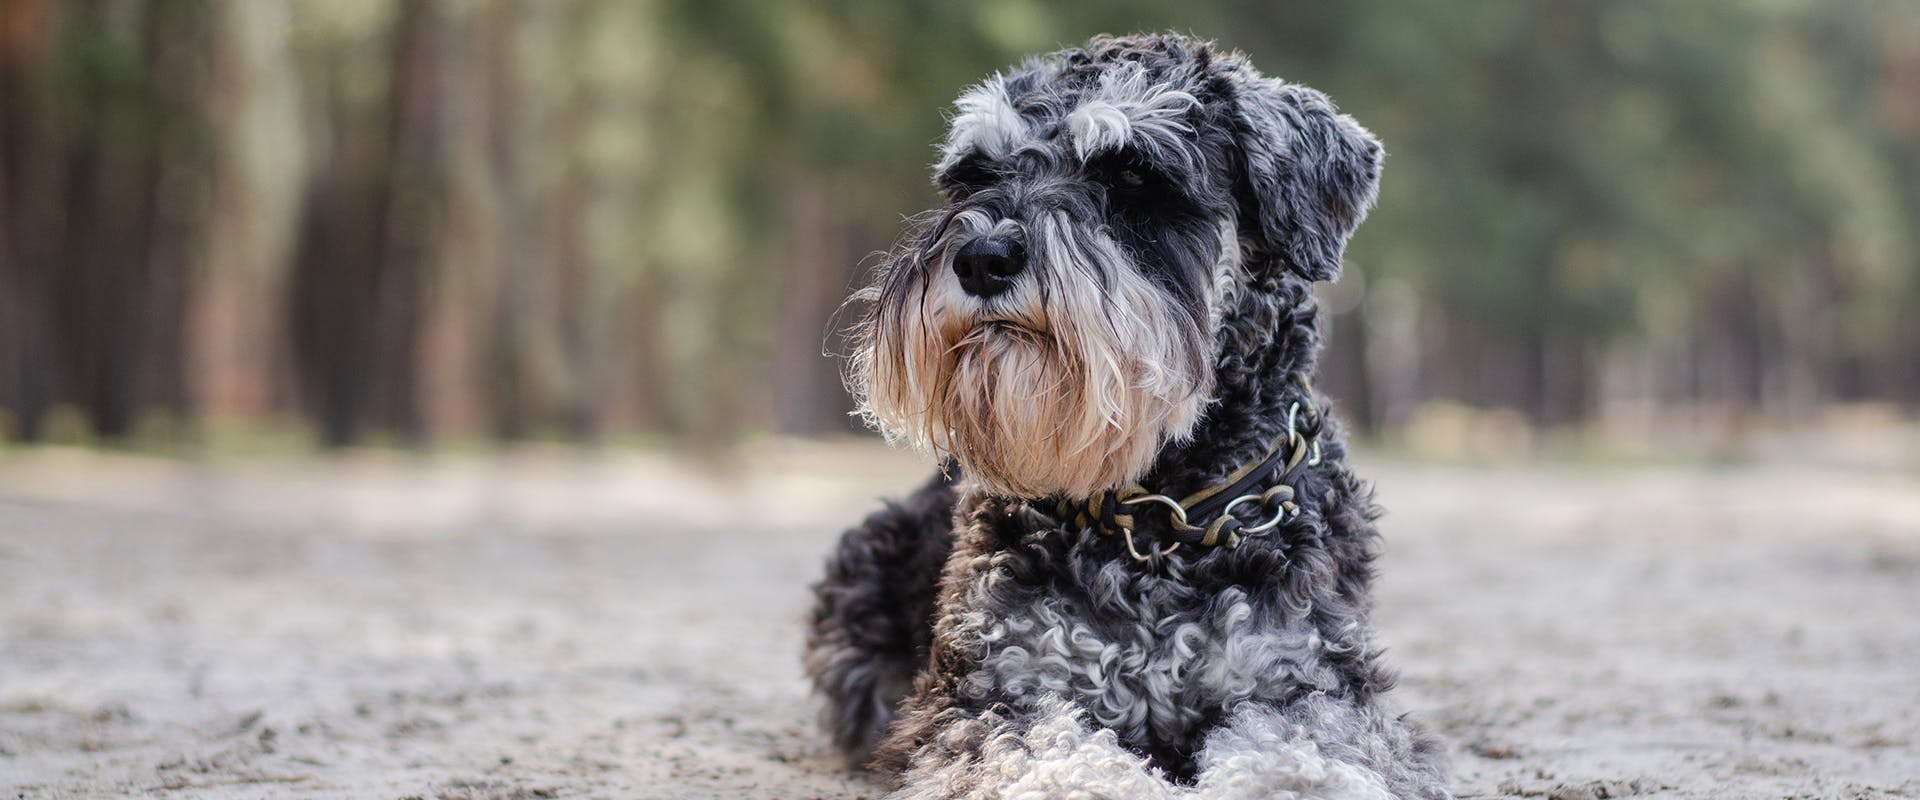 A miniature Schnauzer dog sitting on a sandy beach